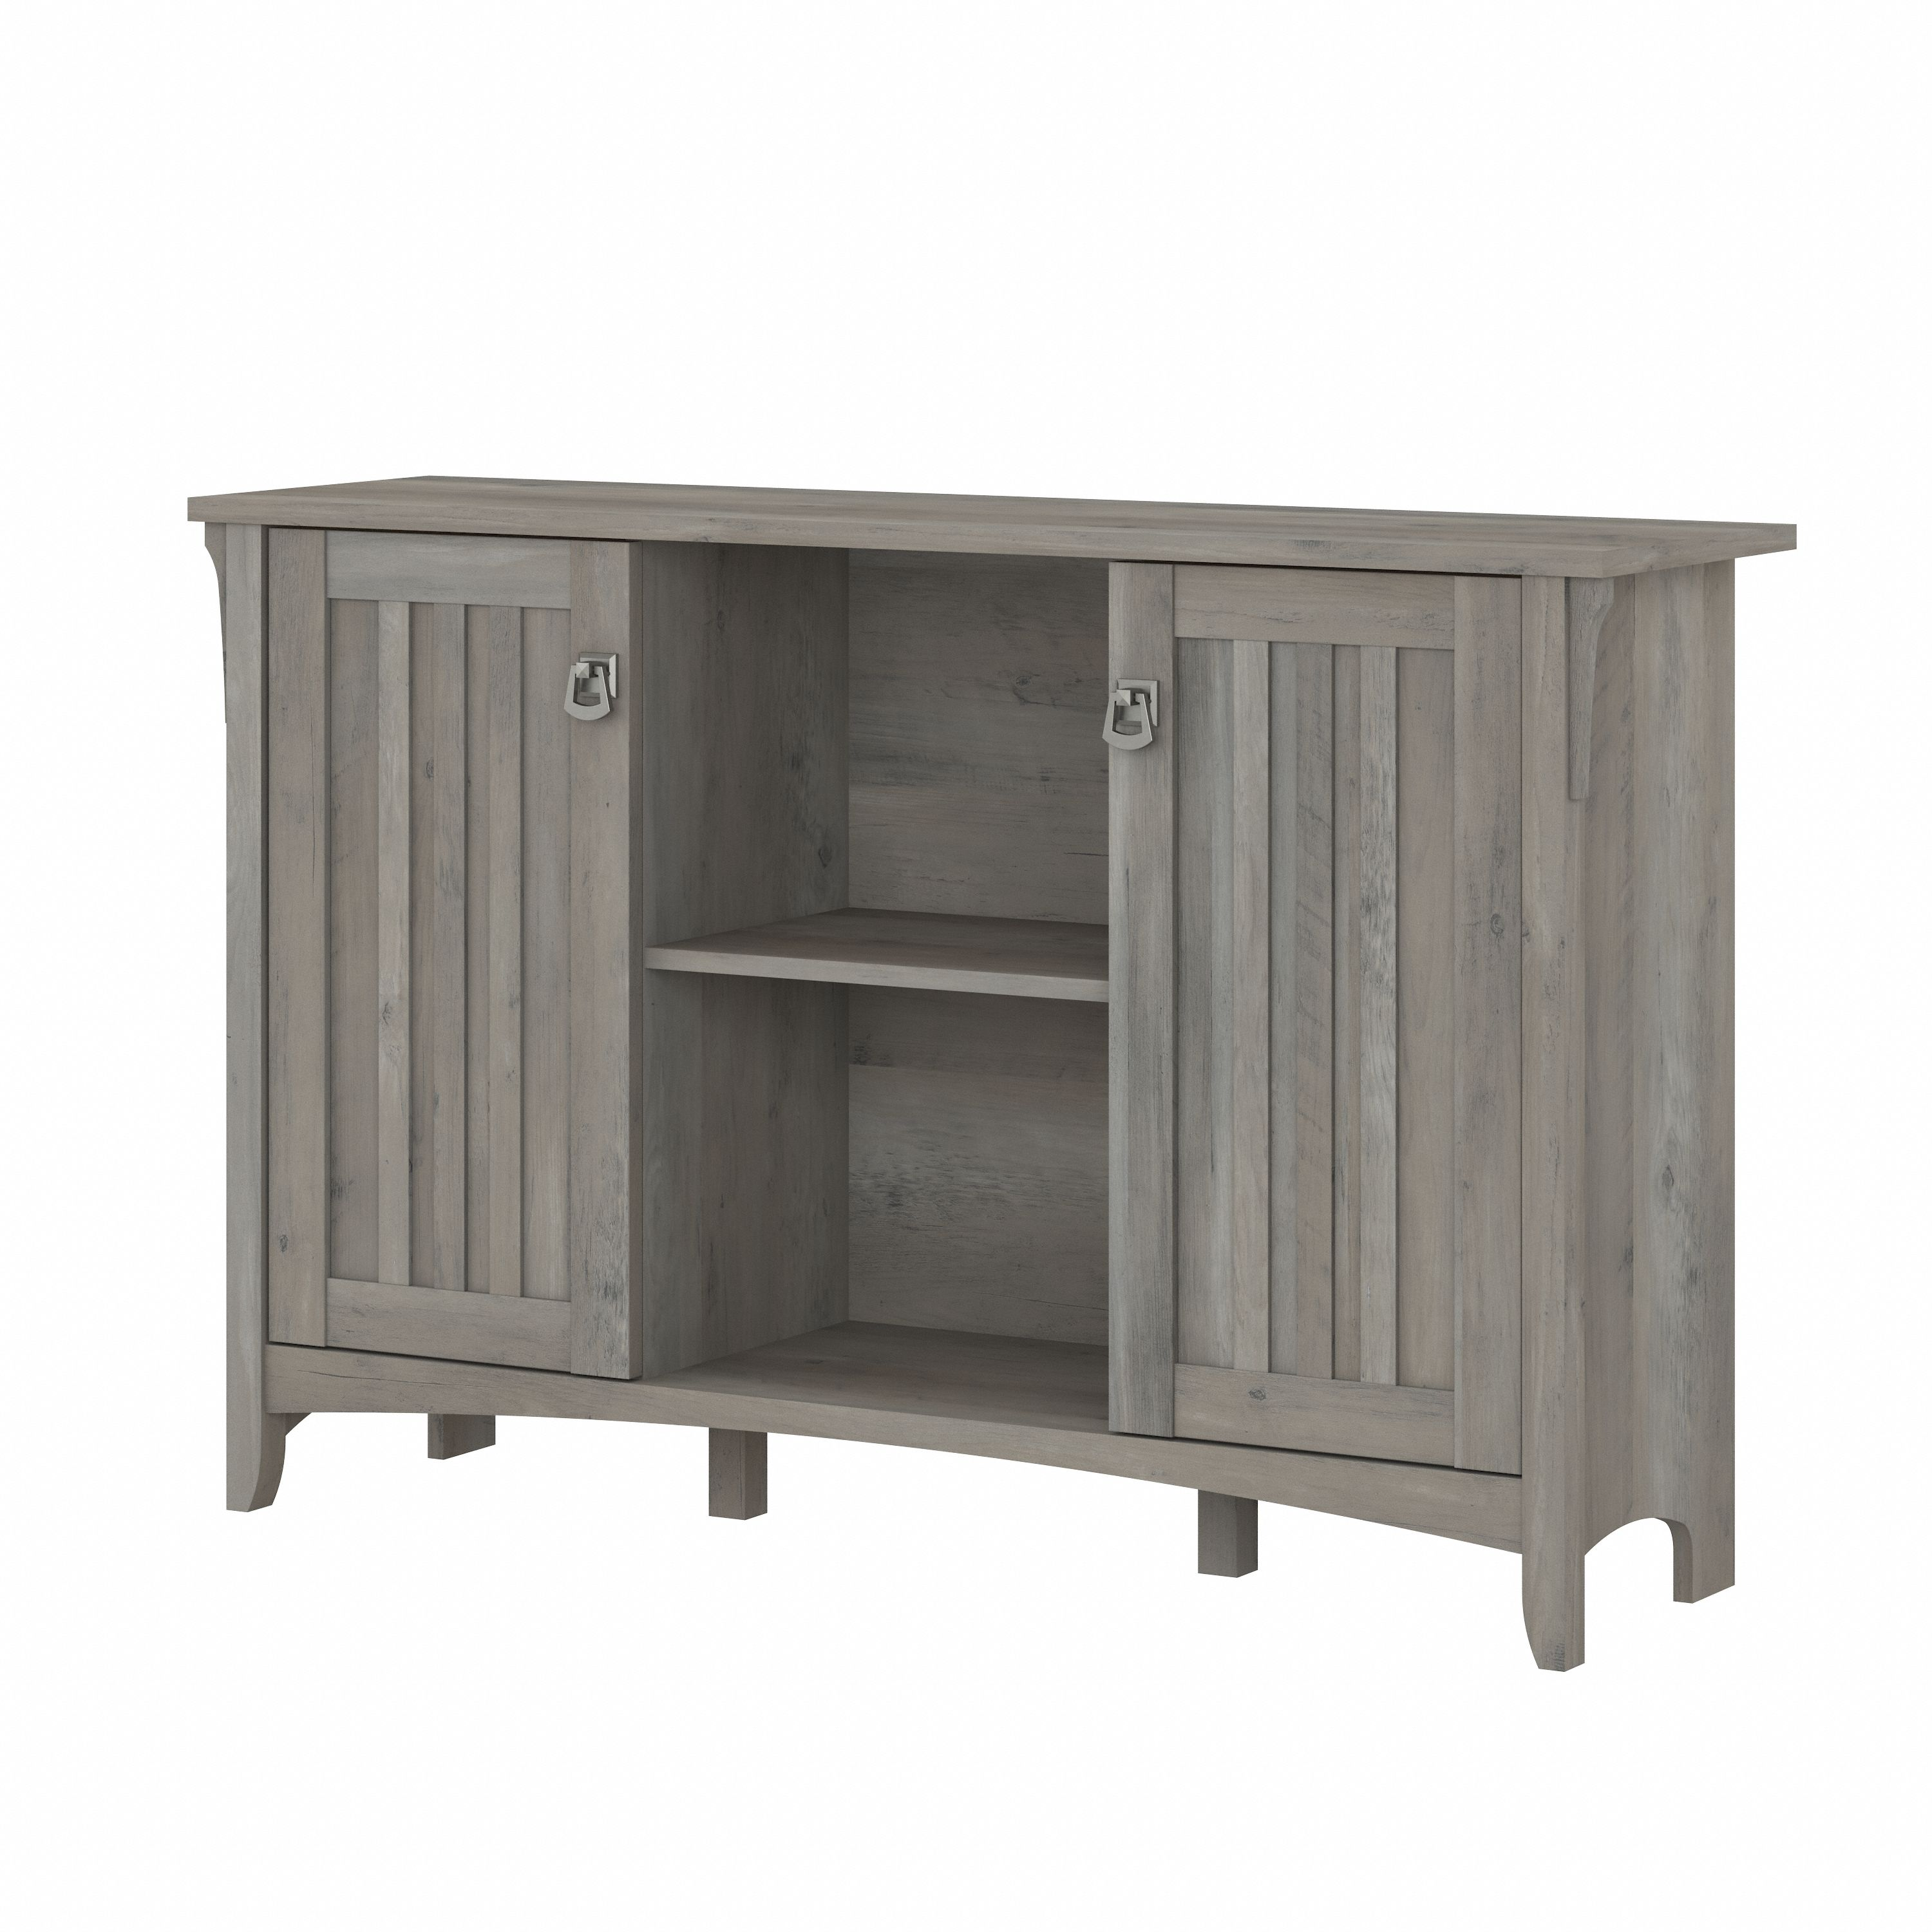 Shop Bush Furniture Salinas Accent Storage Cabinet with Doors 02 SAS147DG-03 #color_driftwood gray